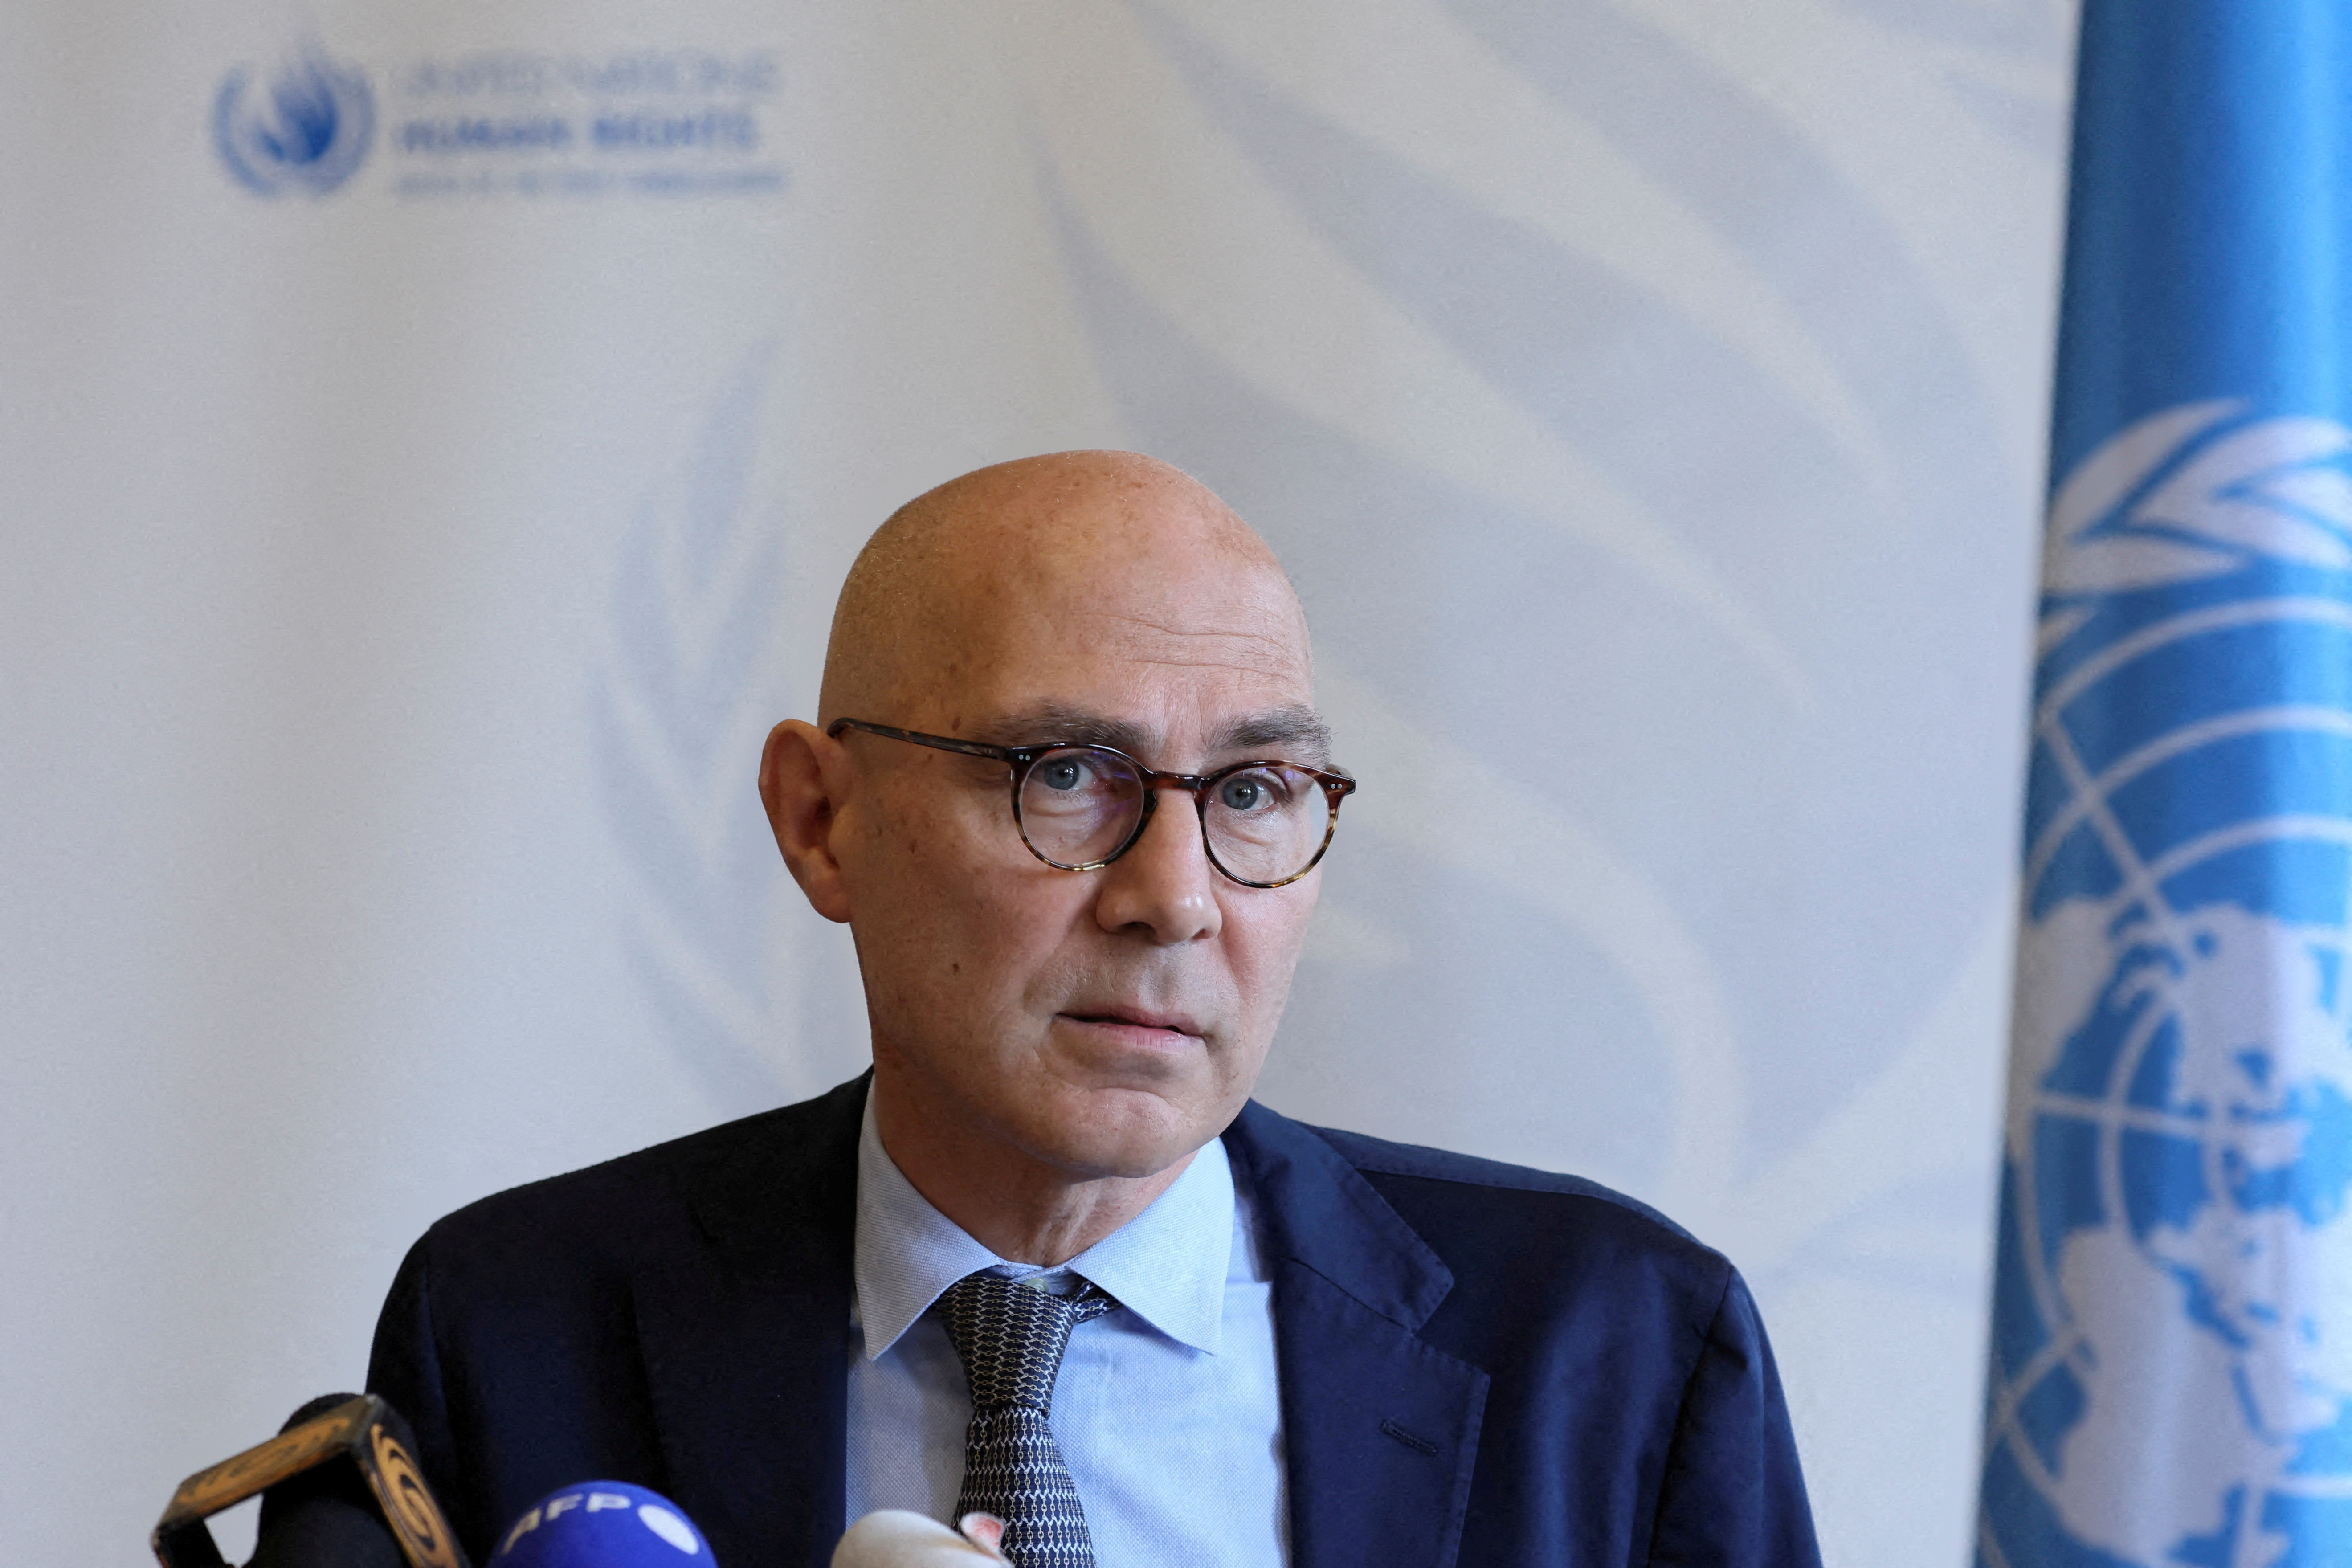 UN High Commissioner Turk briefs media at Palais Wilson in Geneva